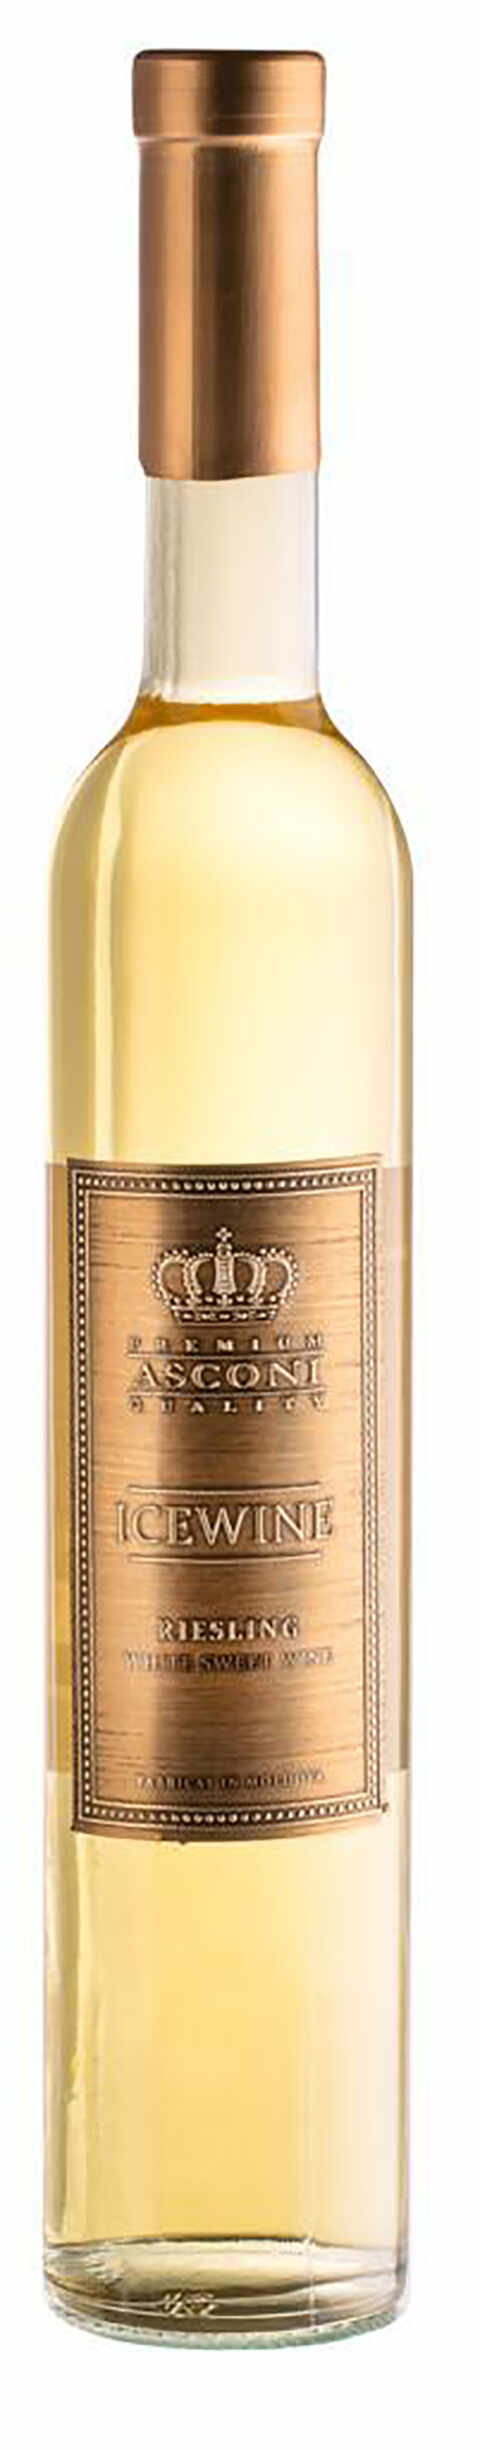 Vin alb - Asconi, Ice Wine, Riesling, dulce, 2016 | Asconi